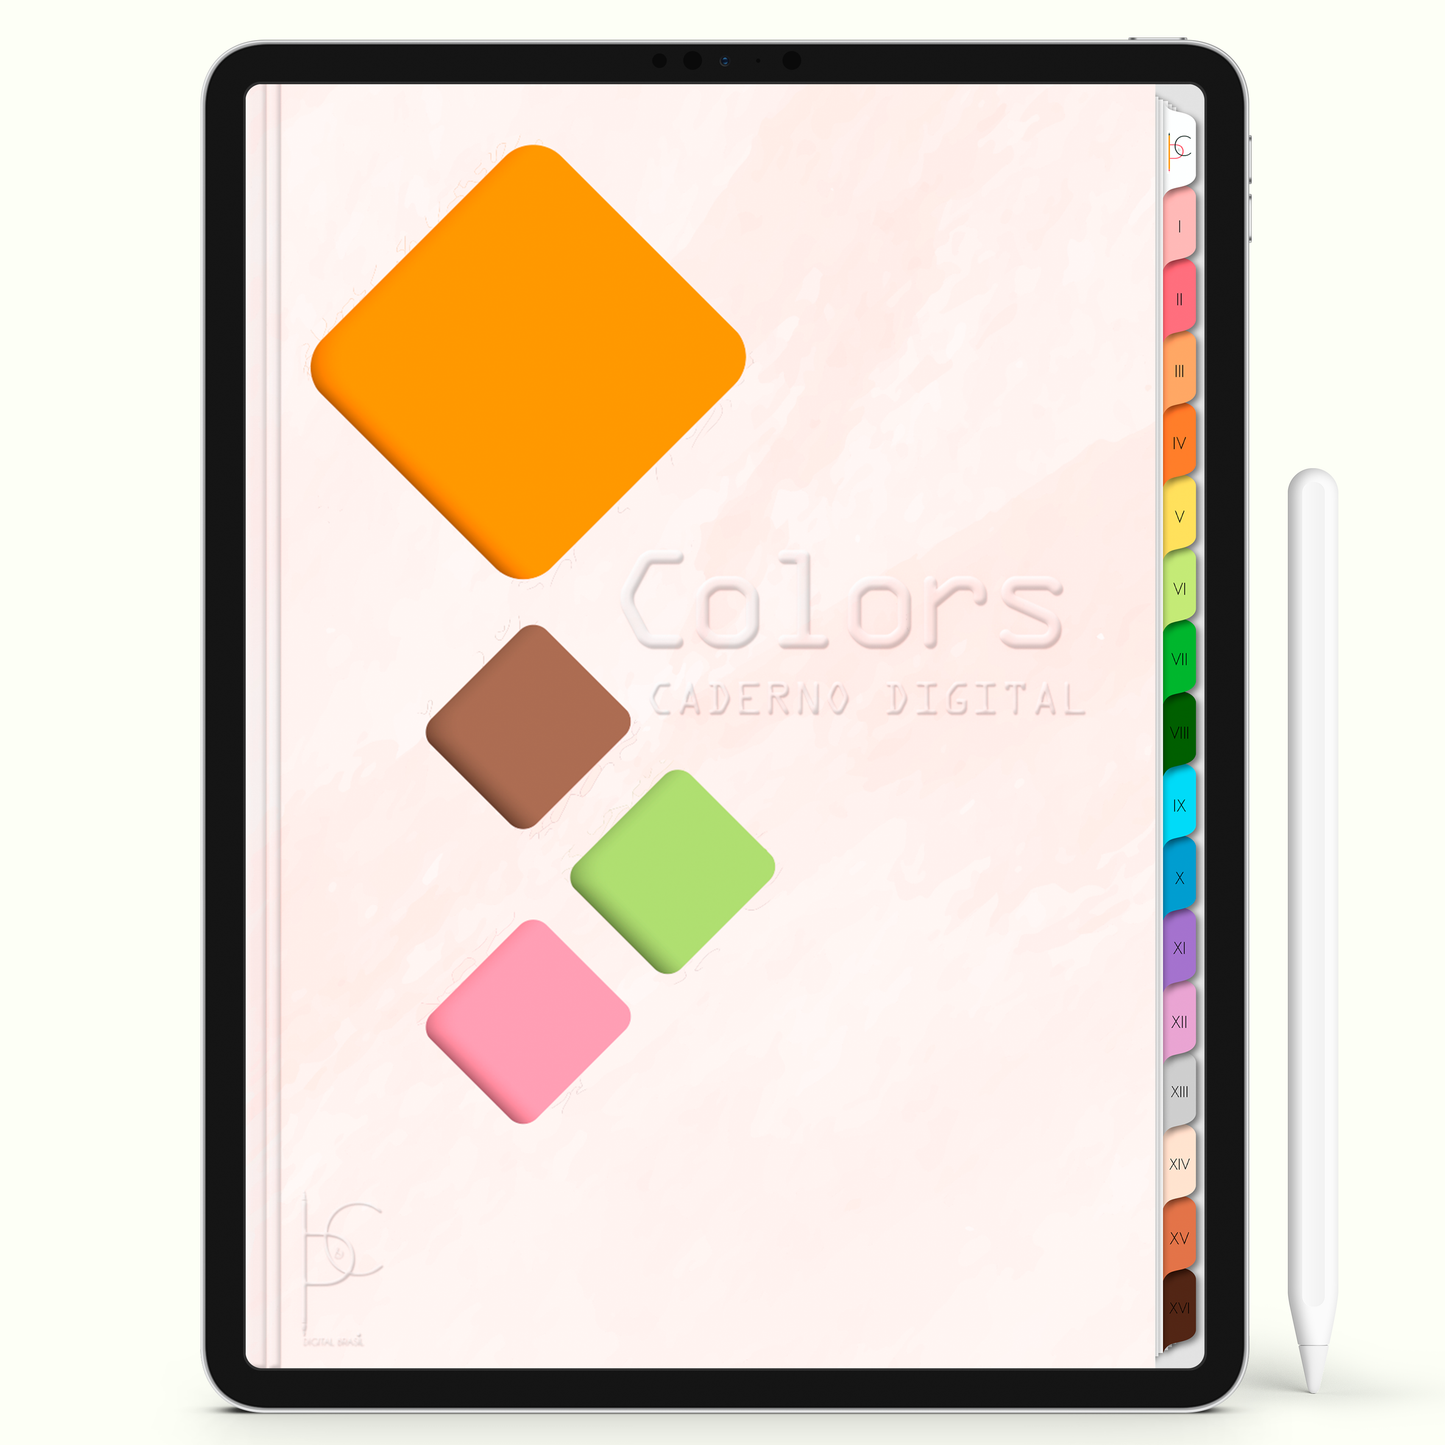 Caderno Digital Colors Colorindo 16 Matérias • Para iPad e Tablet Android • Download instantâneo • Sustentável